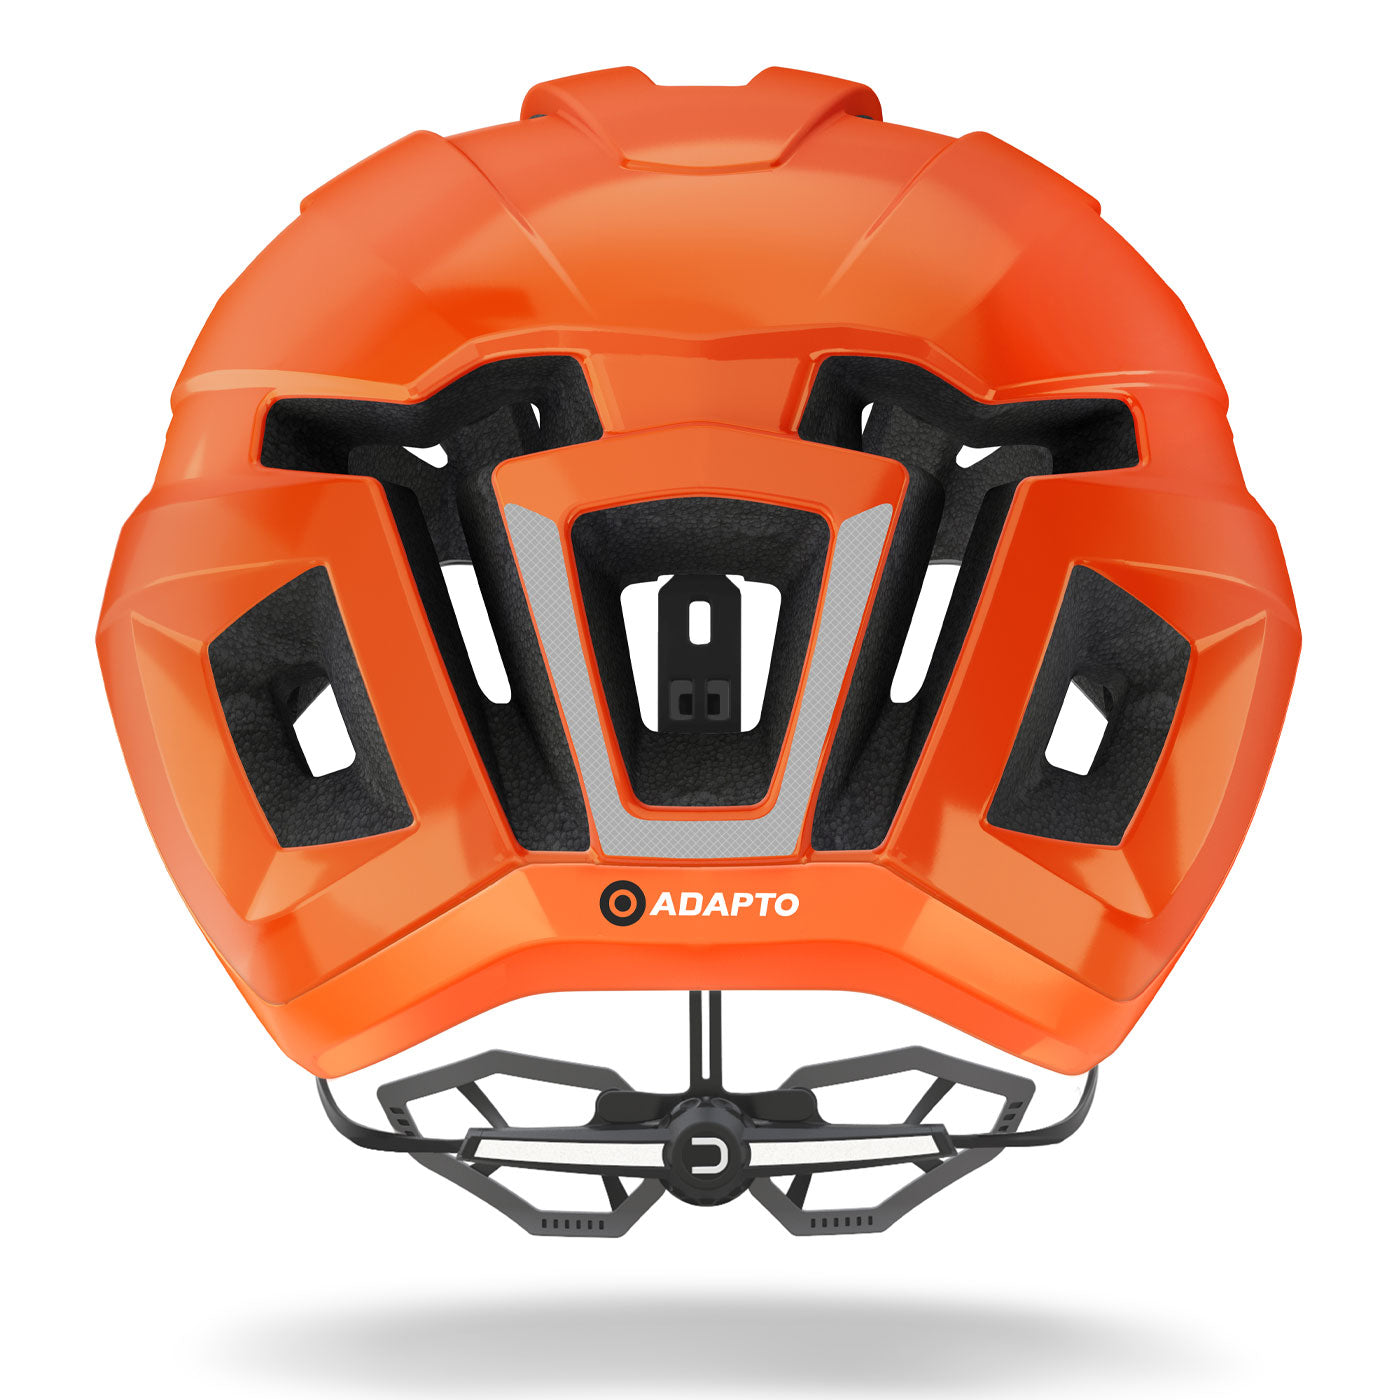 Dotout Adapto helmet - Orange | All4cycling